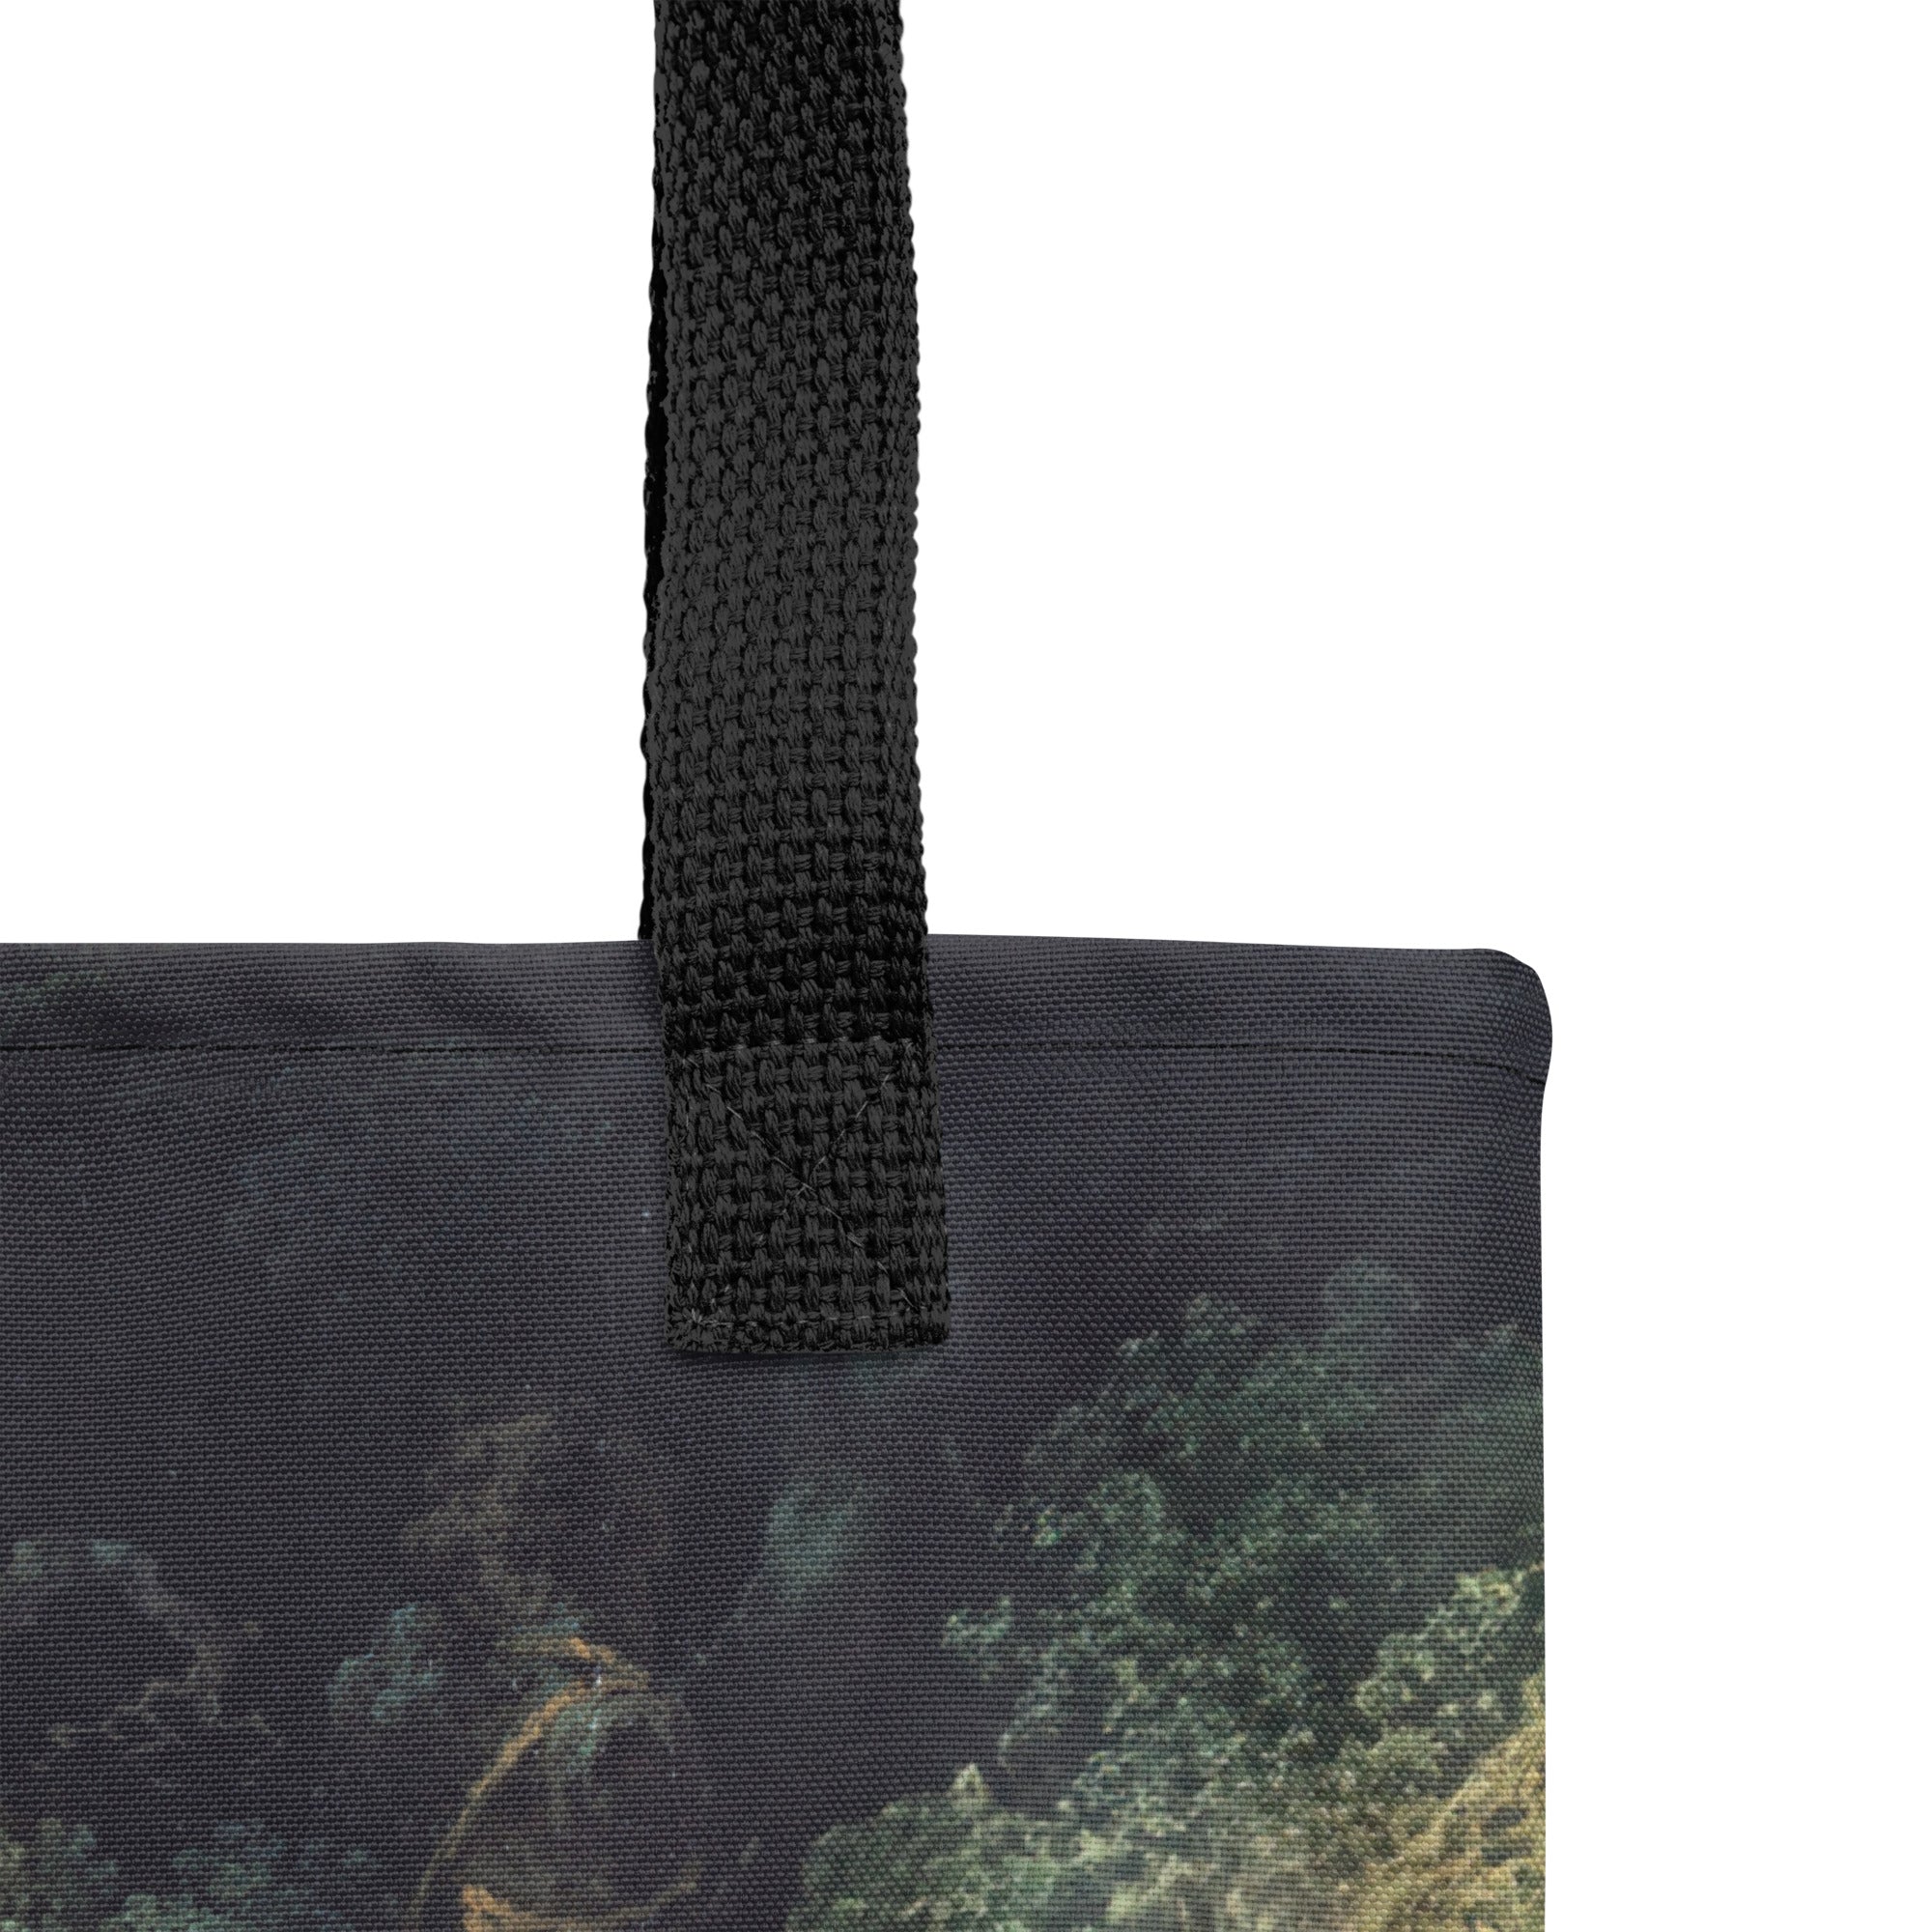 Jean-Honoré Fragonard 'The Swing' Famous Painting Totebag | Allover Print Art Tote Bag